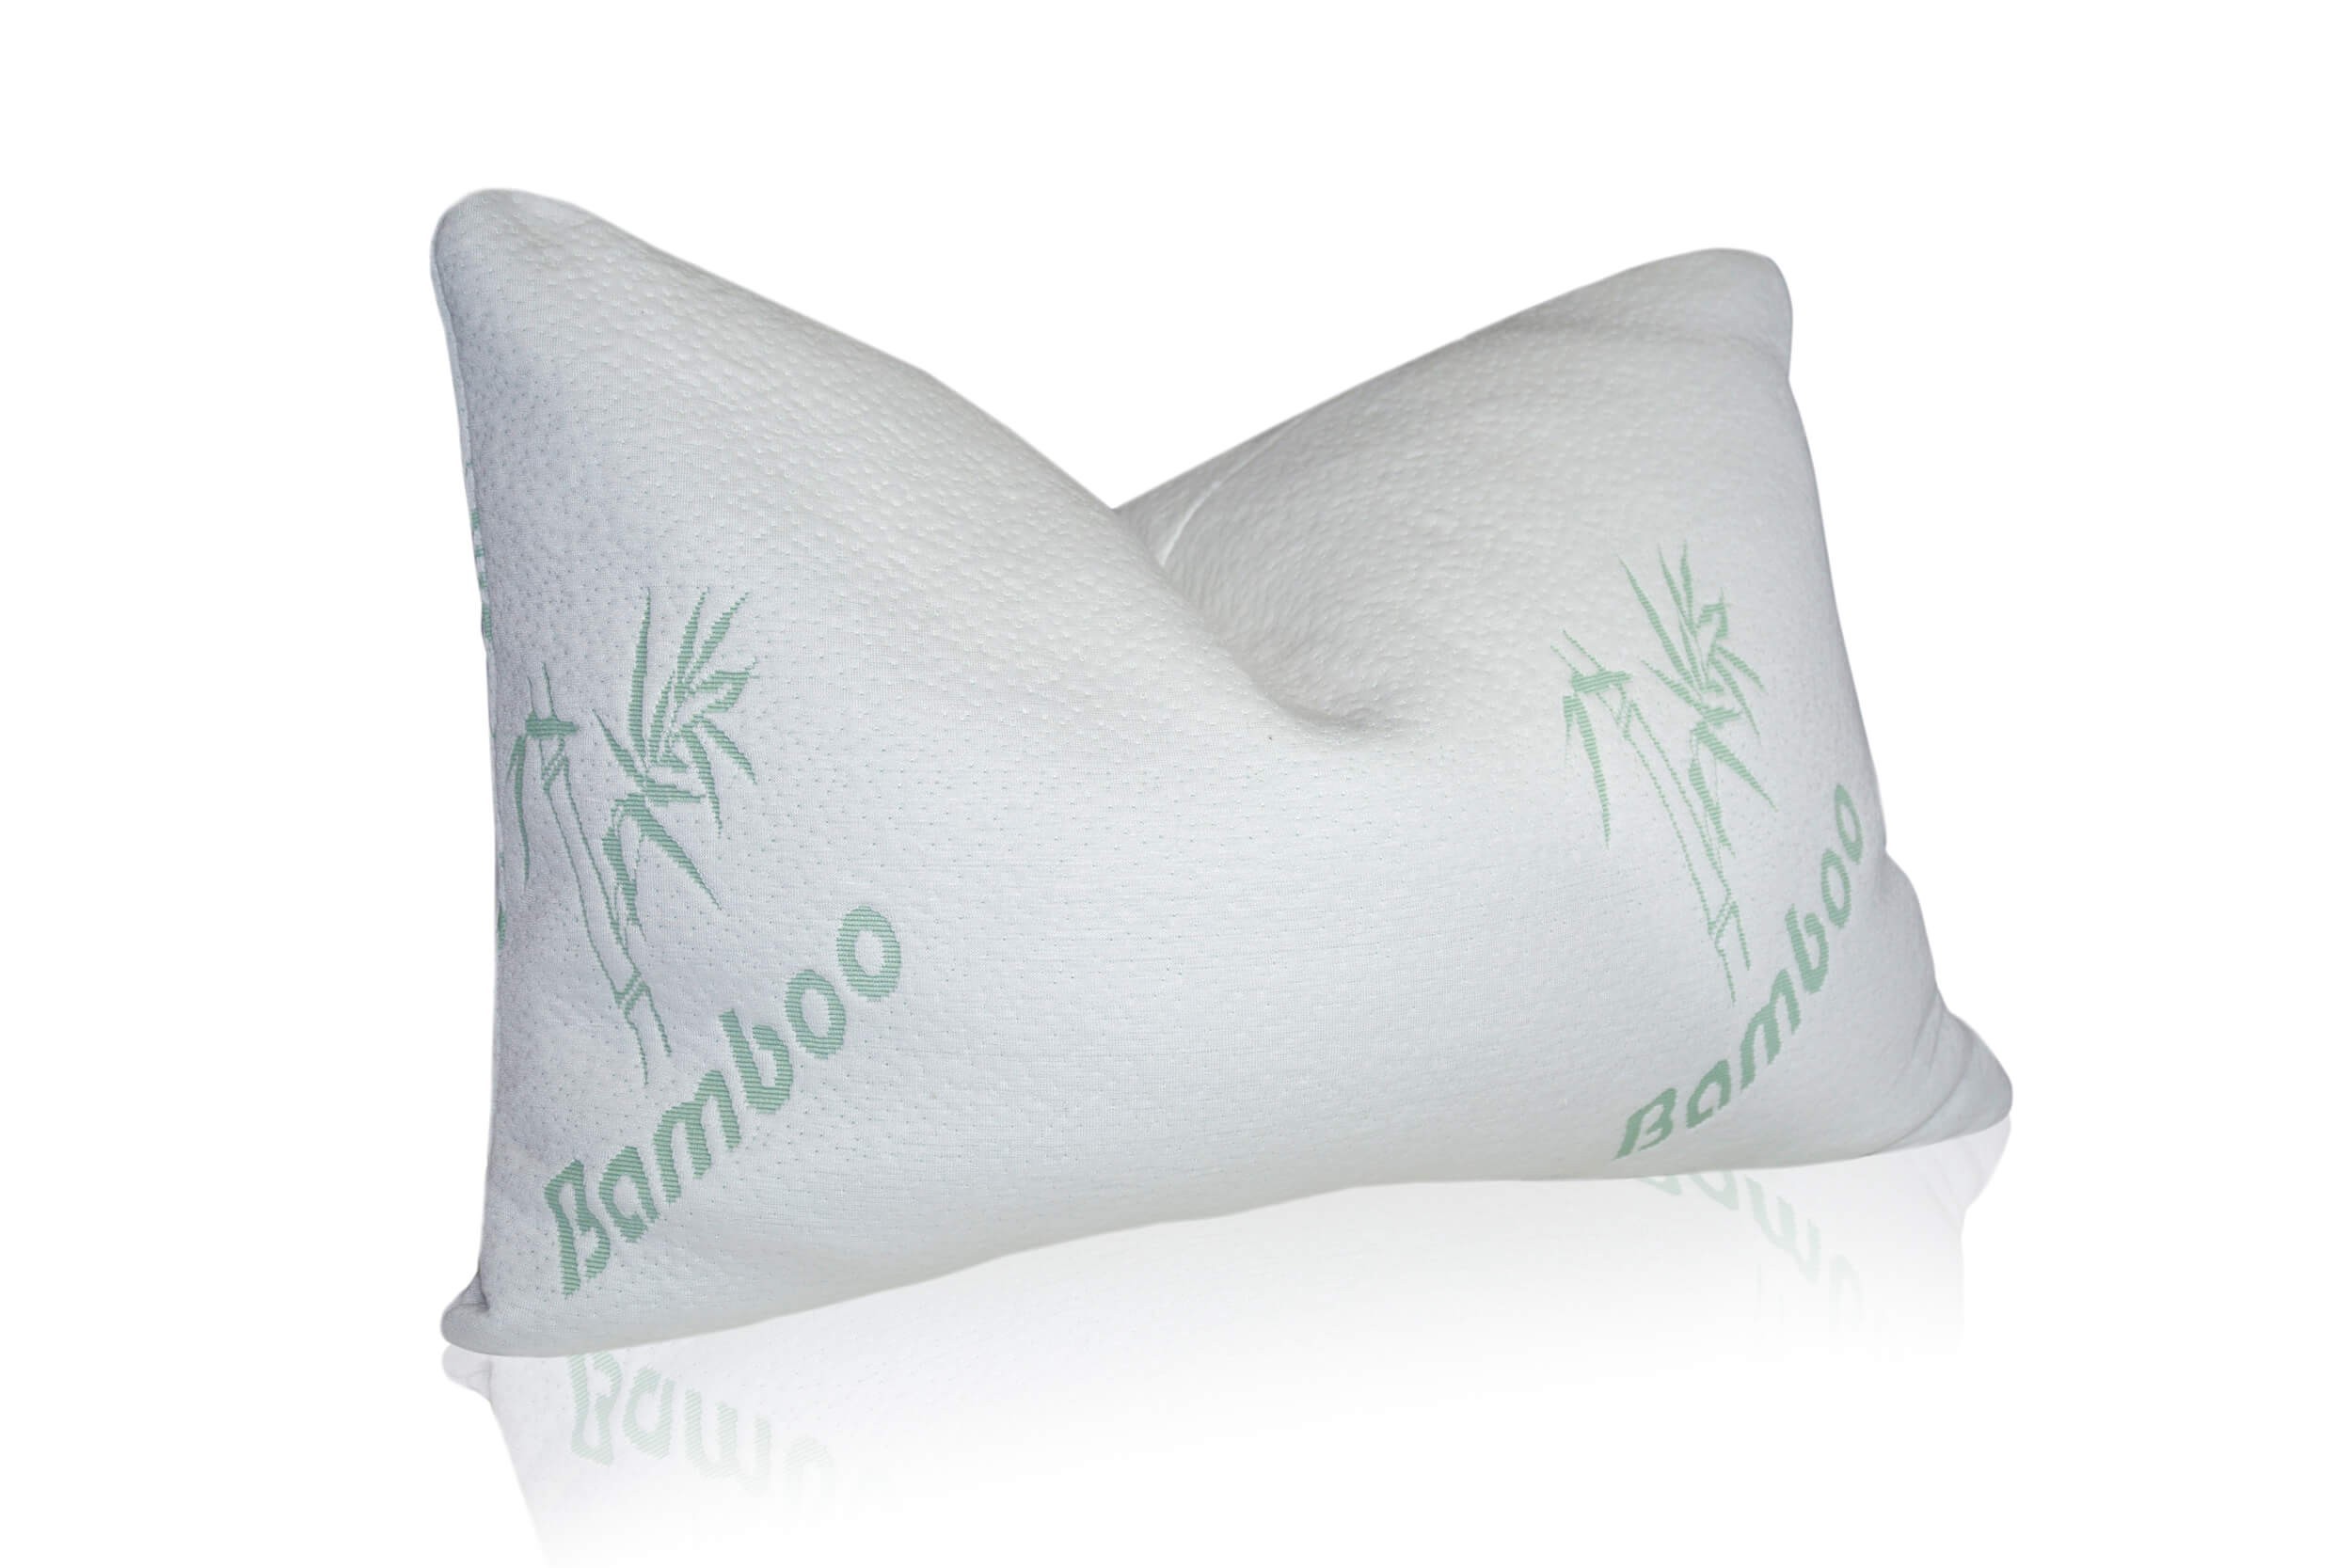 micro bamboo pillow